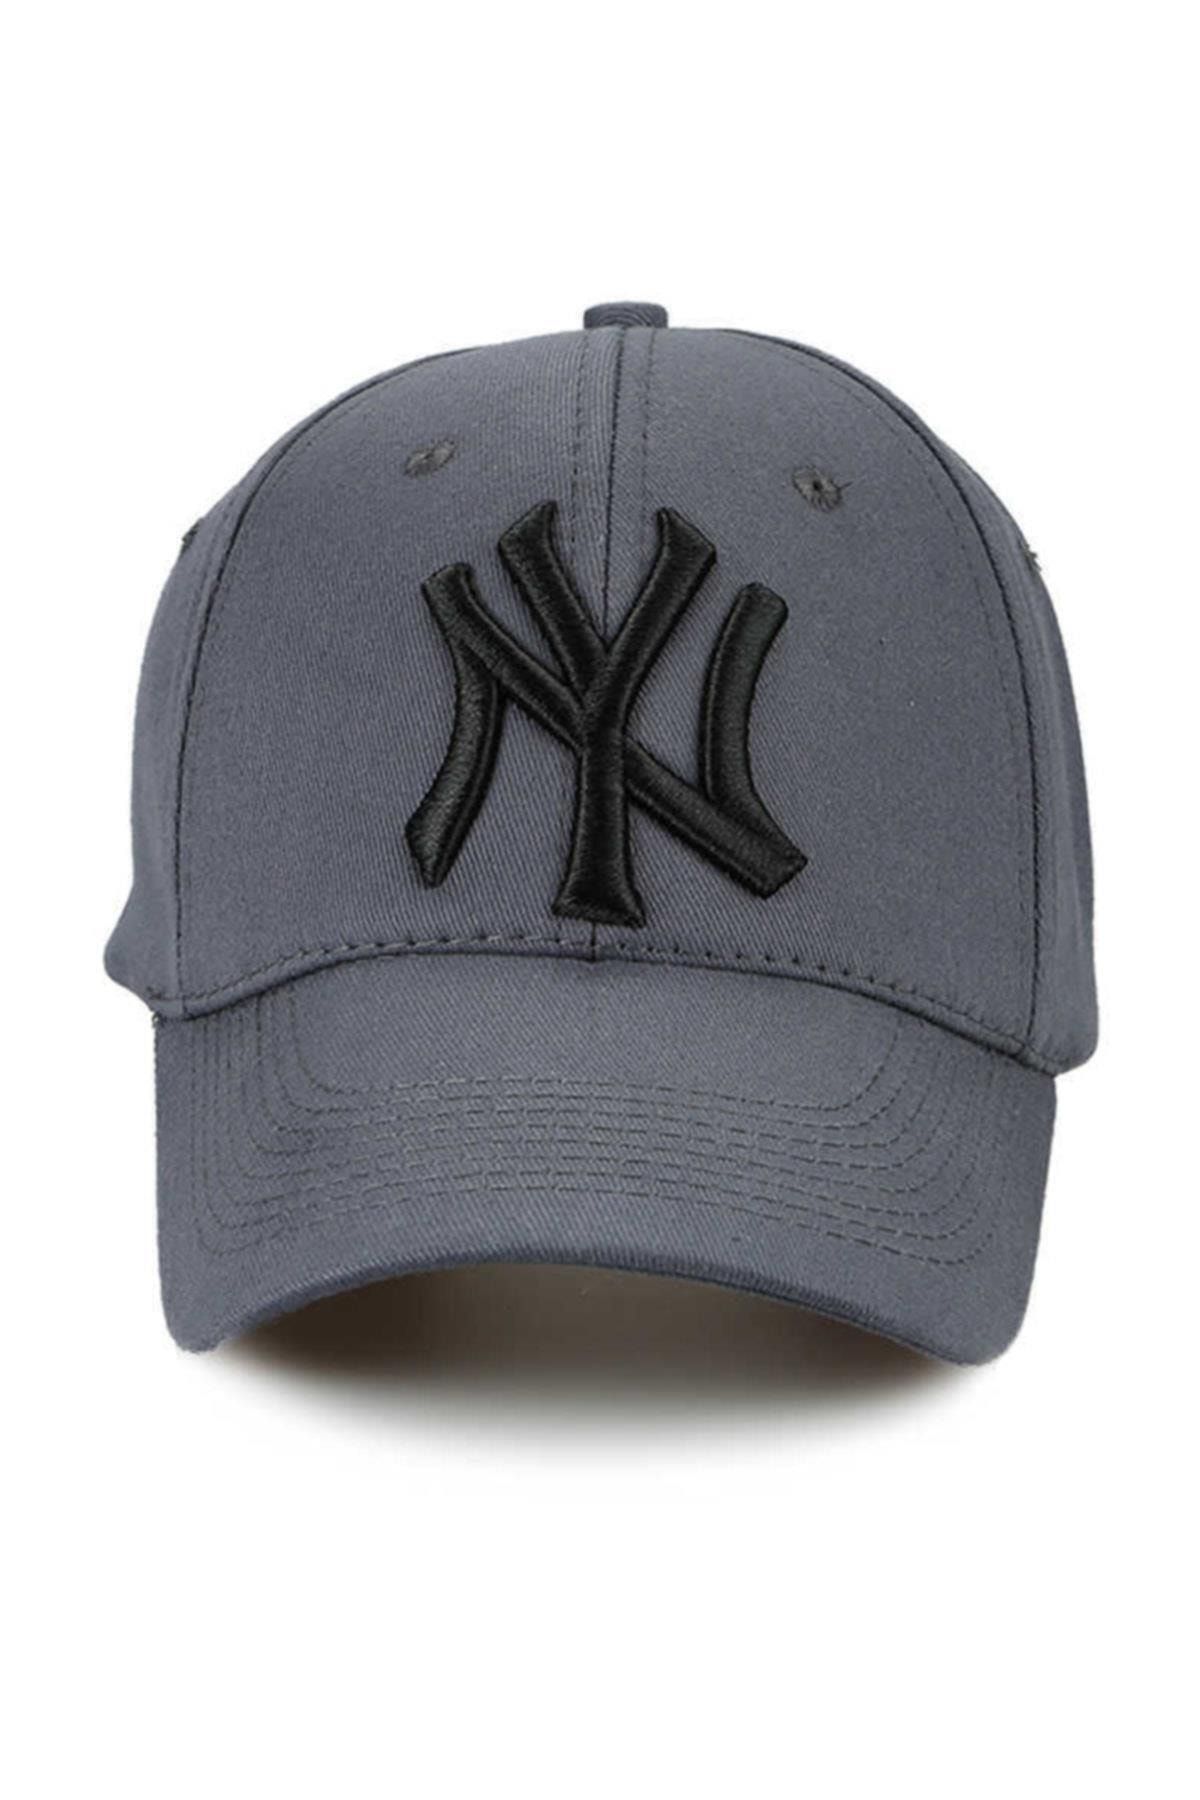 Moda Kızı Butik Ny New York Yankees Gri Şapka